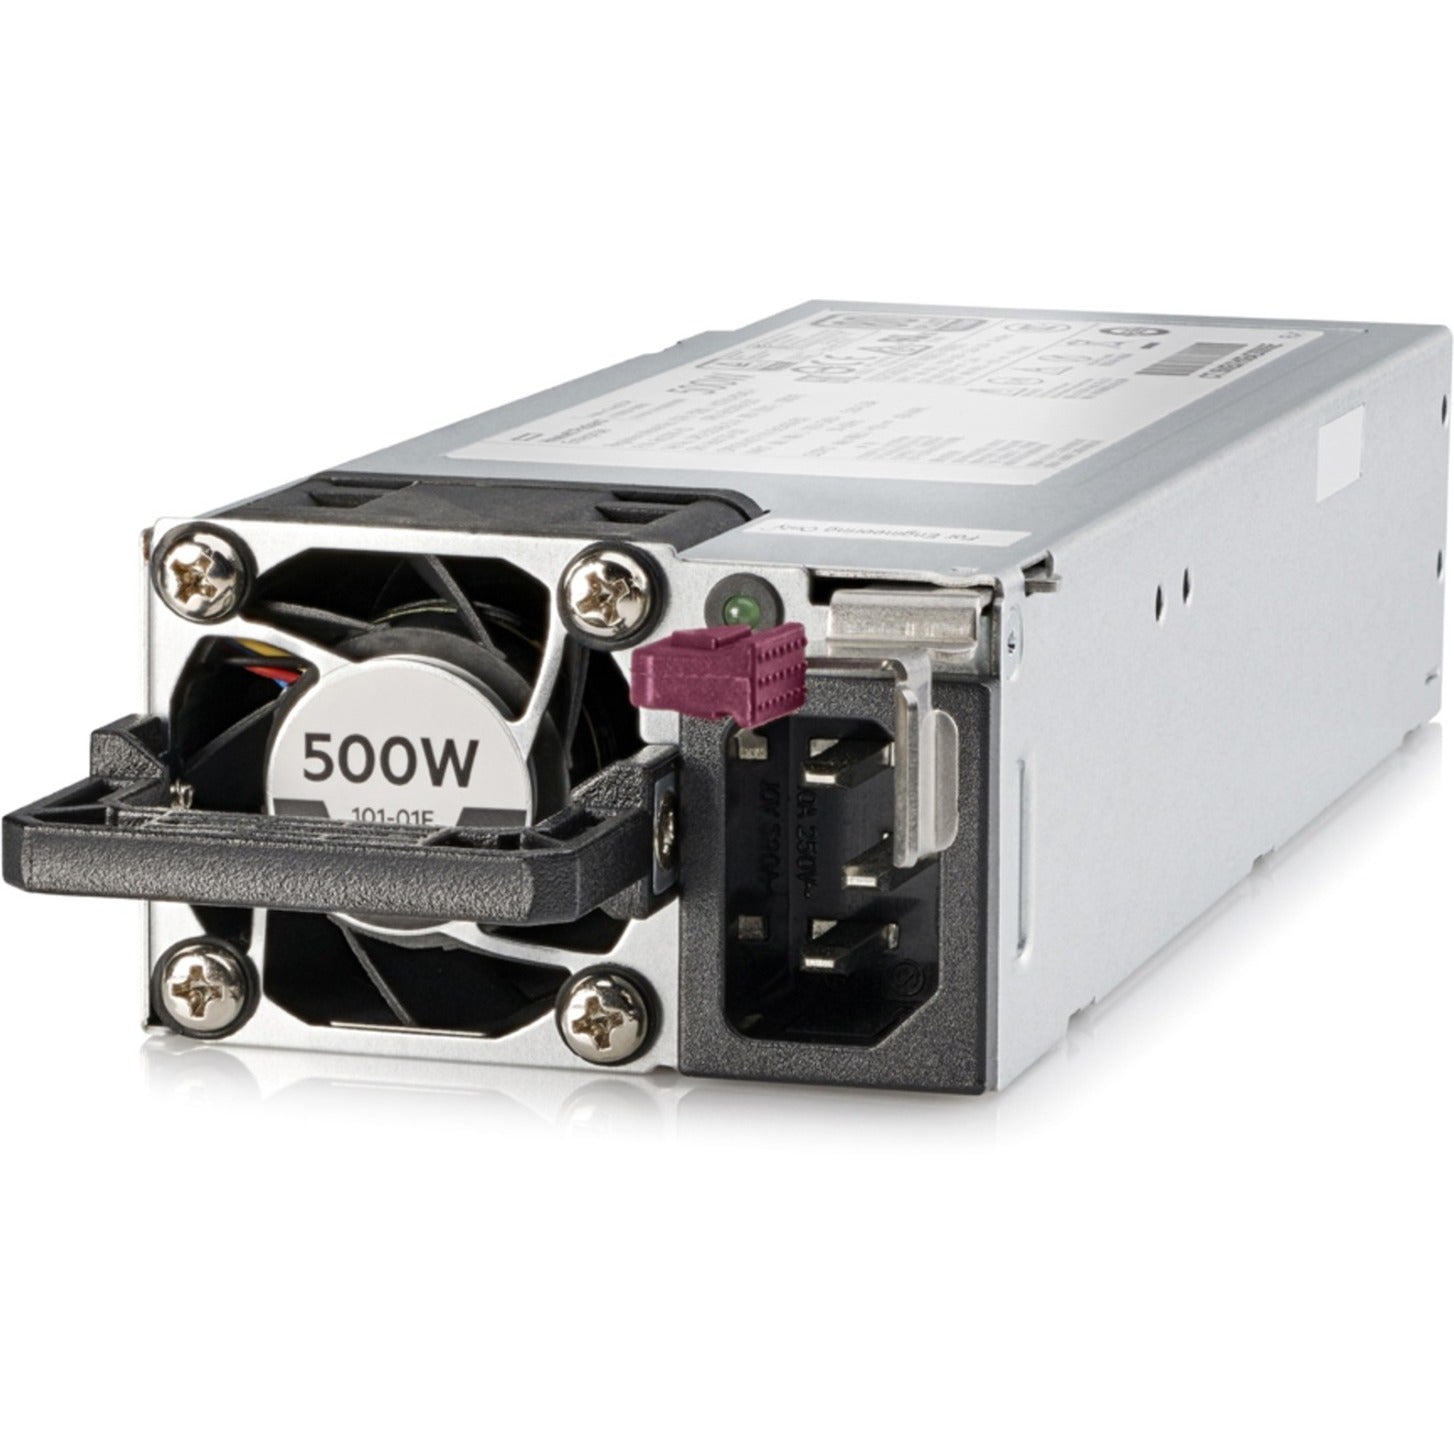 HPE 865408-B21 500W Flex Slot Platinum Hot Plug Low Halogen Power Supply Kit, Reliable and Efficient Power Solution